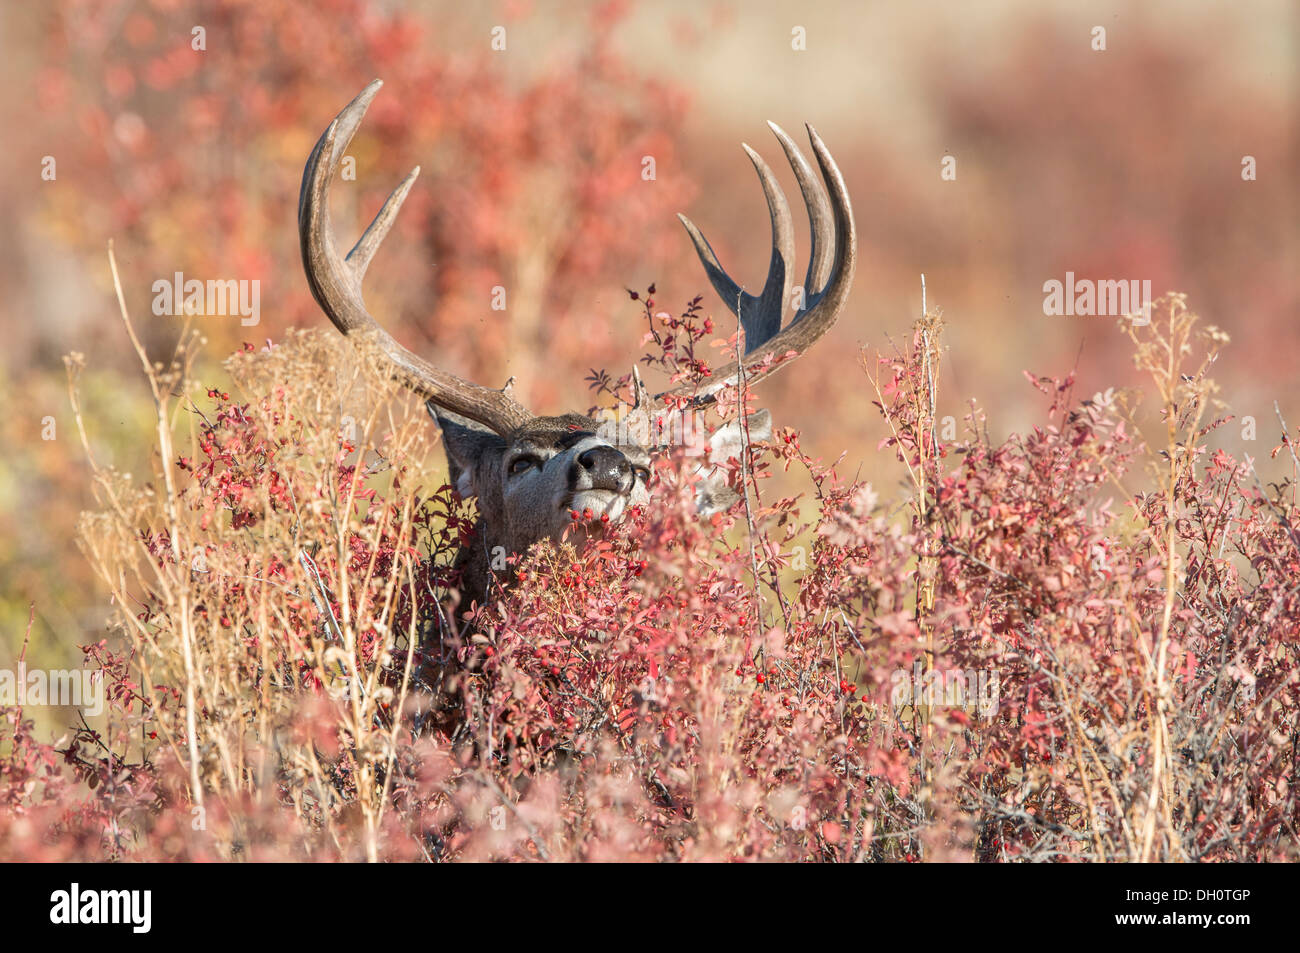 A mule deer buck (Odocoileus hemionus) in Autumnal foliage, Western Montana Stock Photo